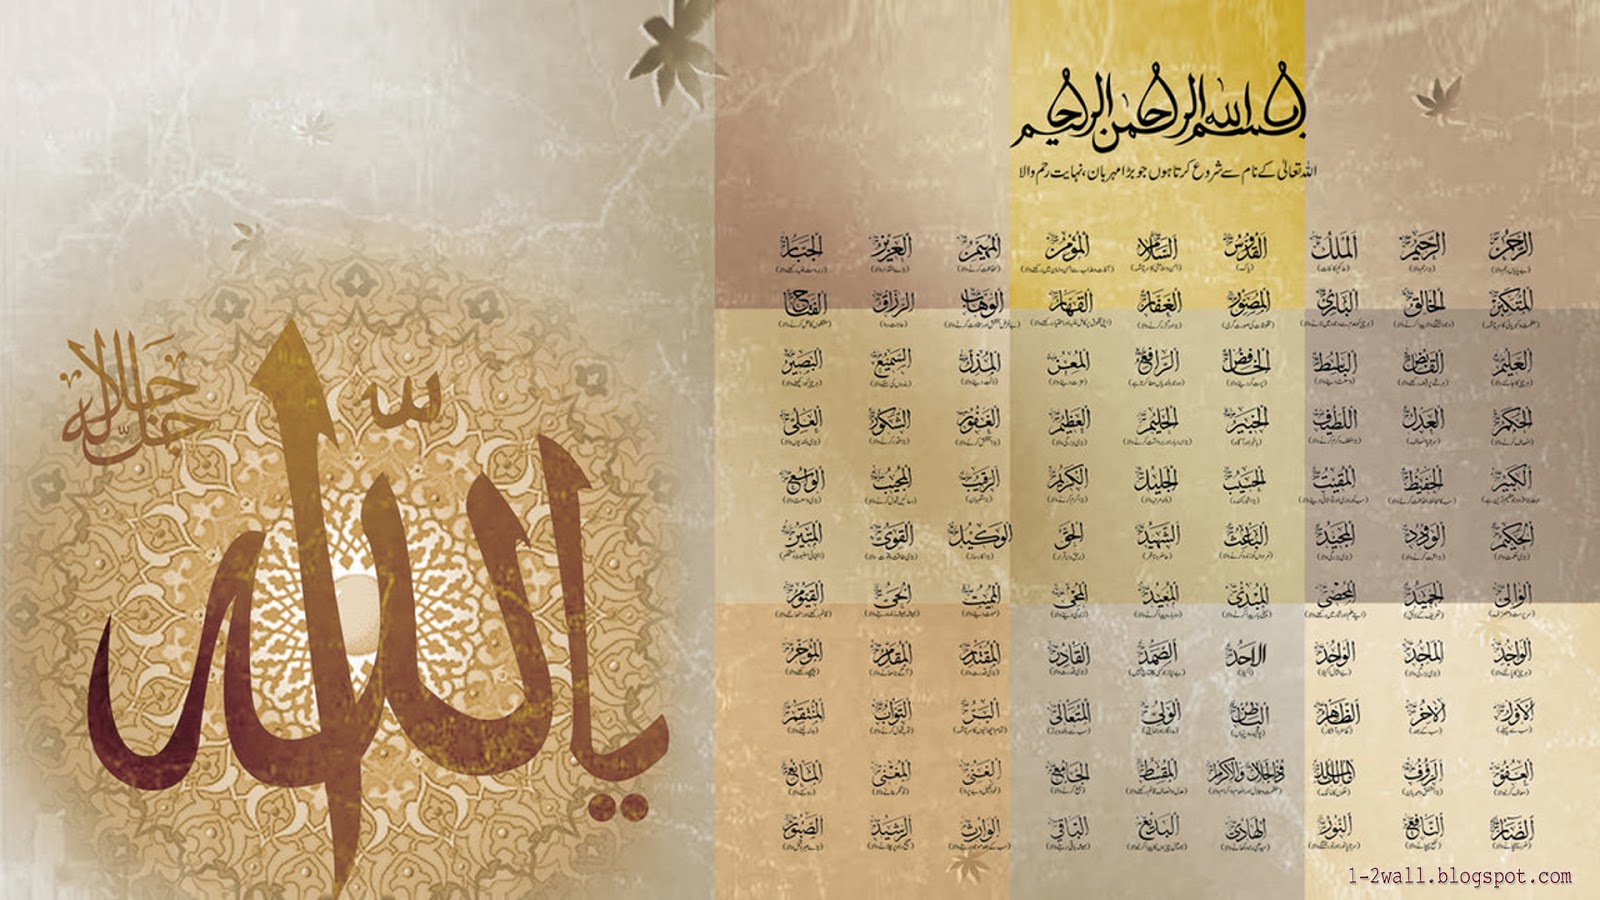 Allah Names HD Wallpapers, Islamic Wallpapers  1-2Wall